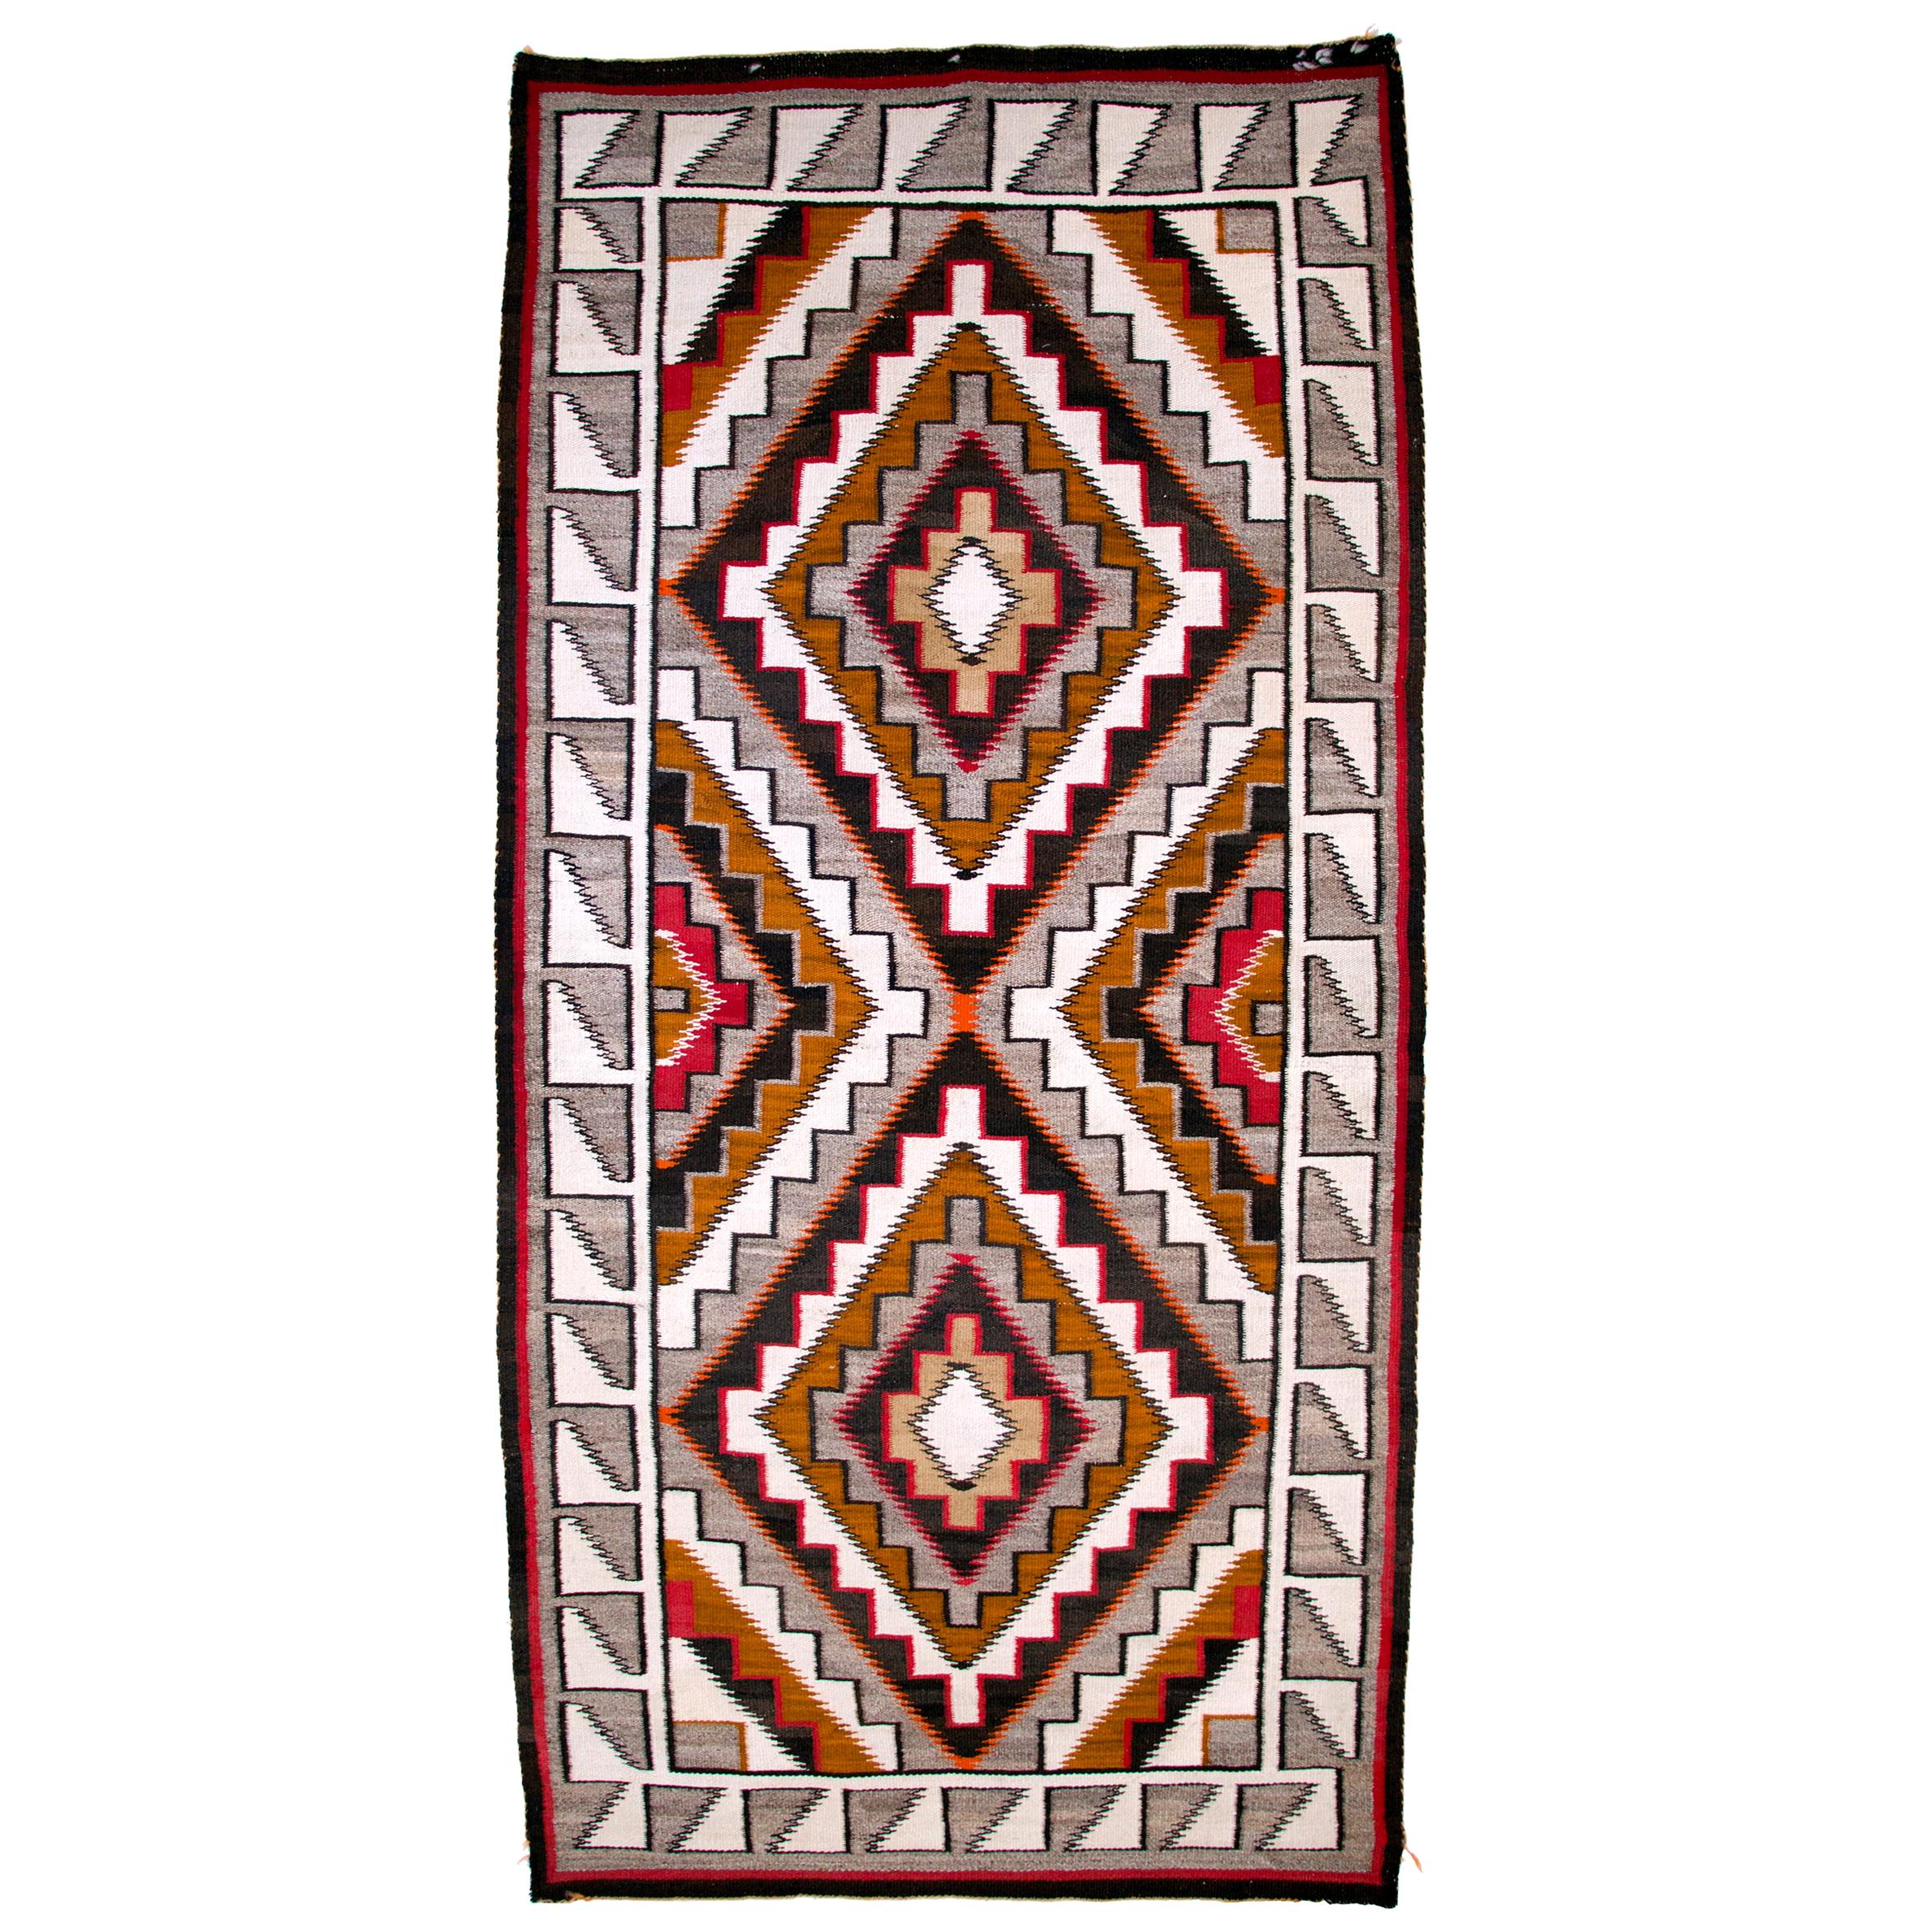 Vintage Navajo Rug, circa 1910, Teec Nos Pos Trading Post Southwestern Textile